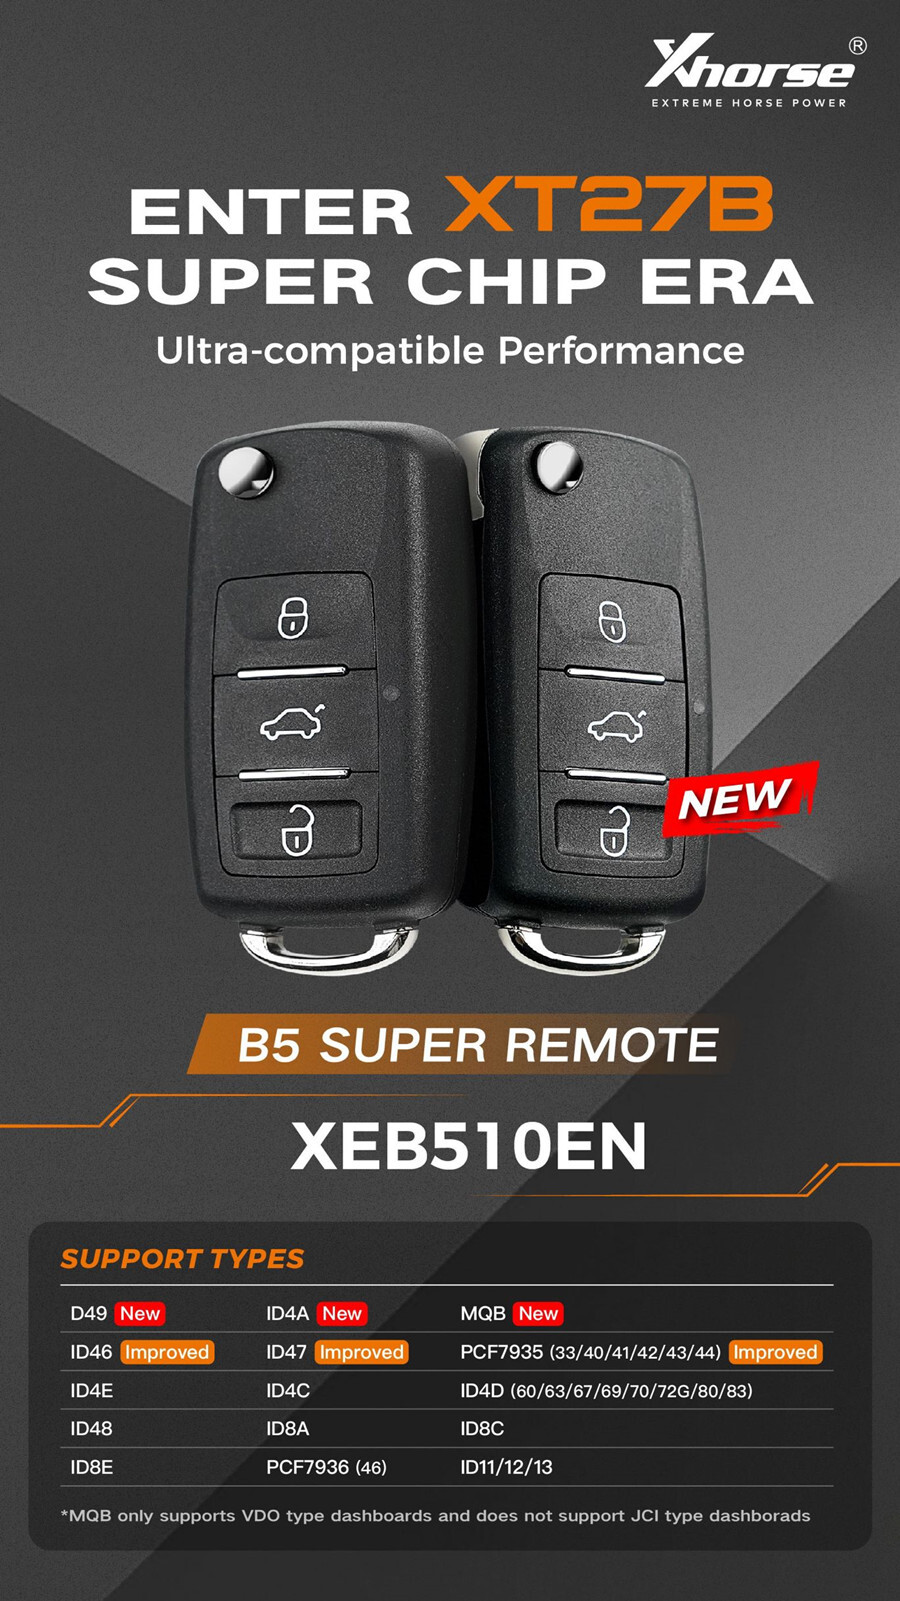 XHORSE XEB510EN B5 Super Remote with XT27B Super Chip